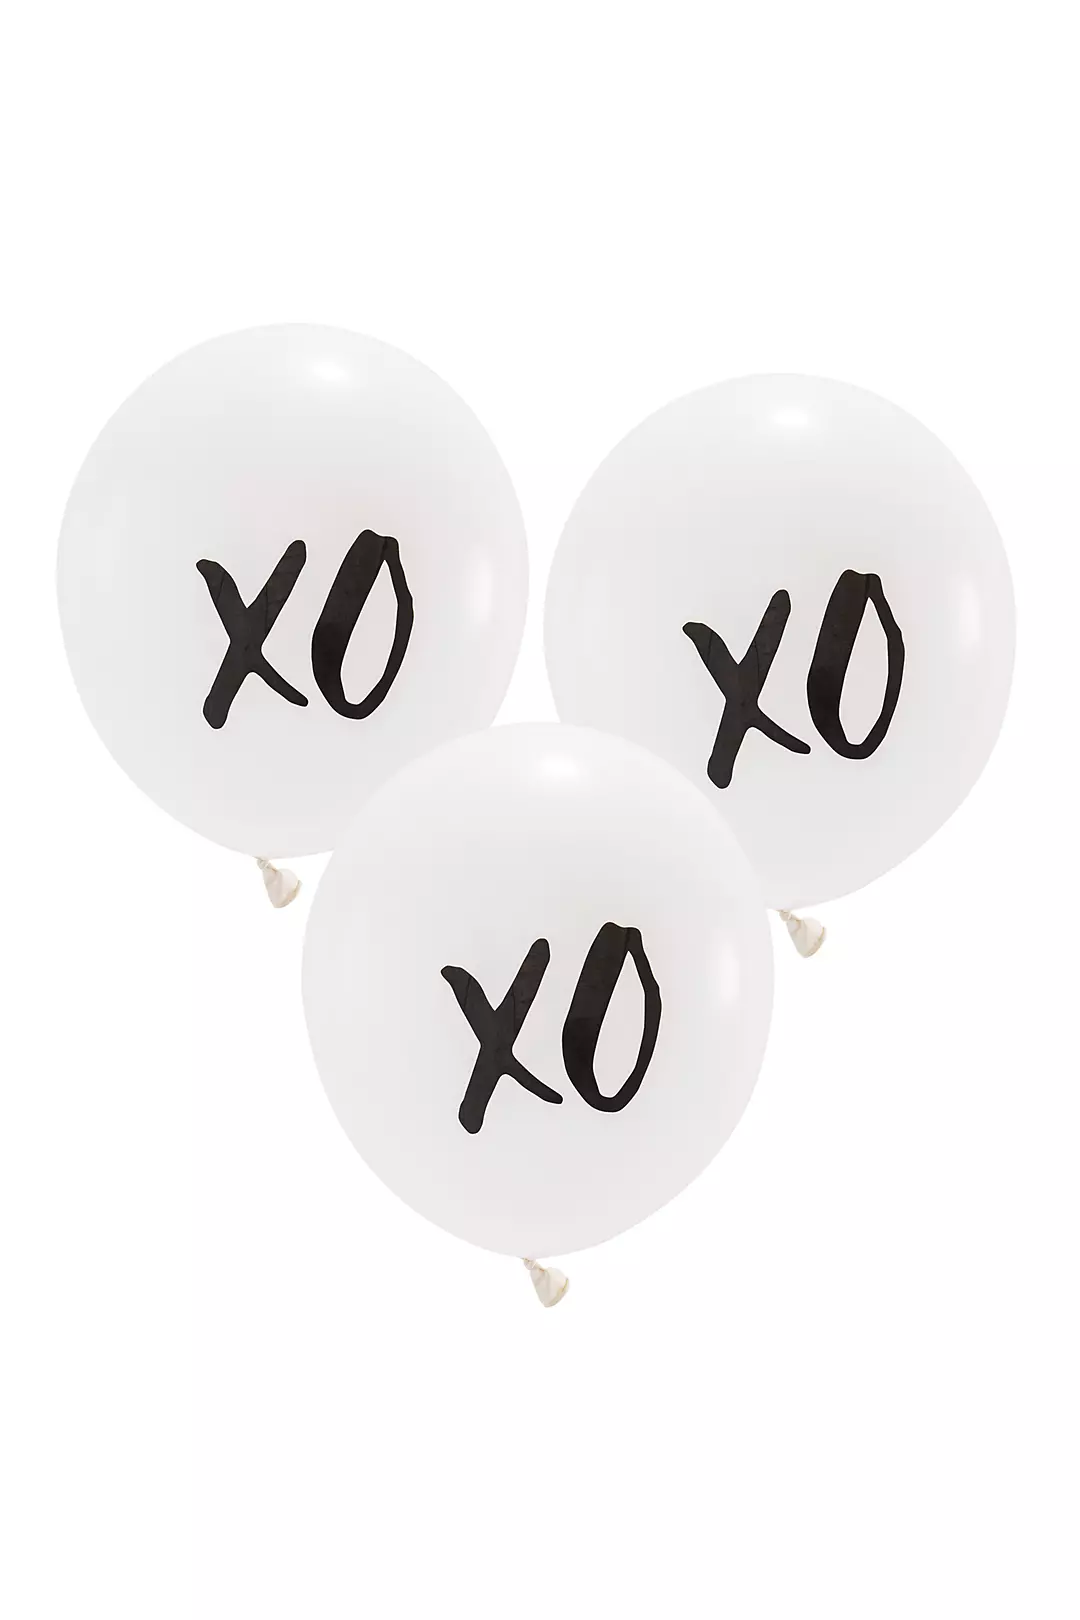 17 Inch White Round XO Balloons Set of 3 Image